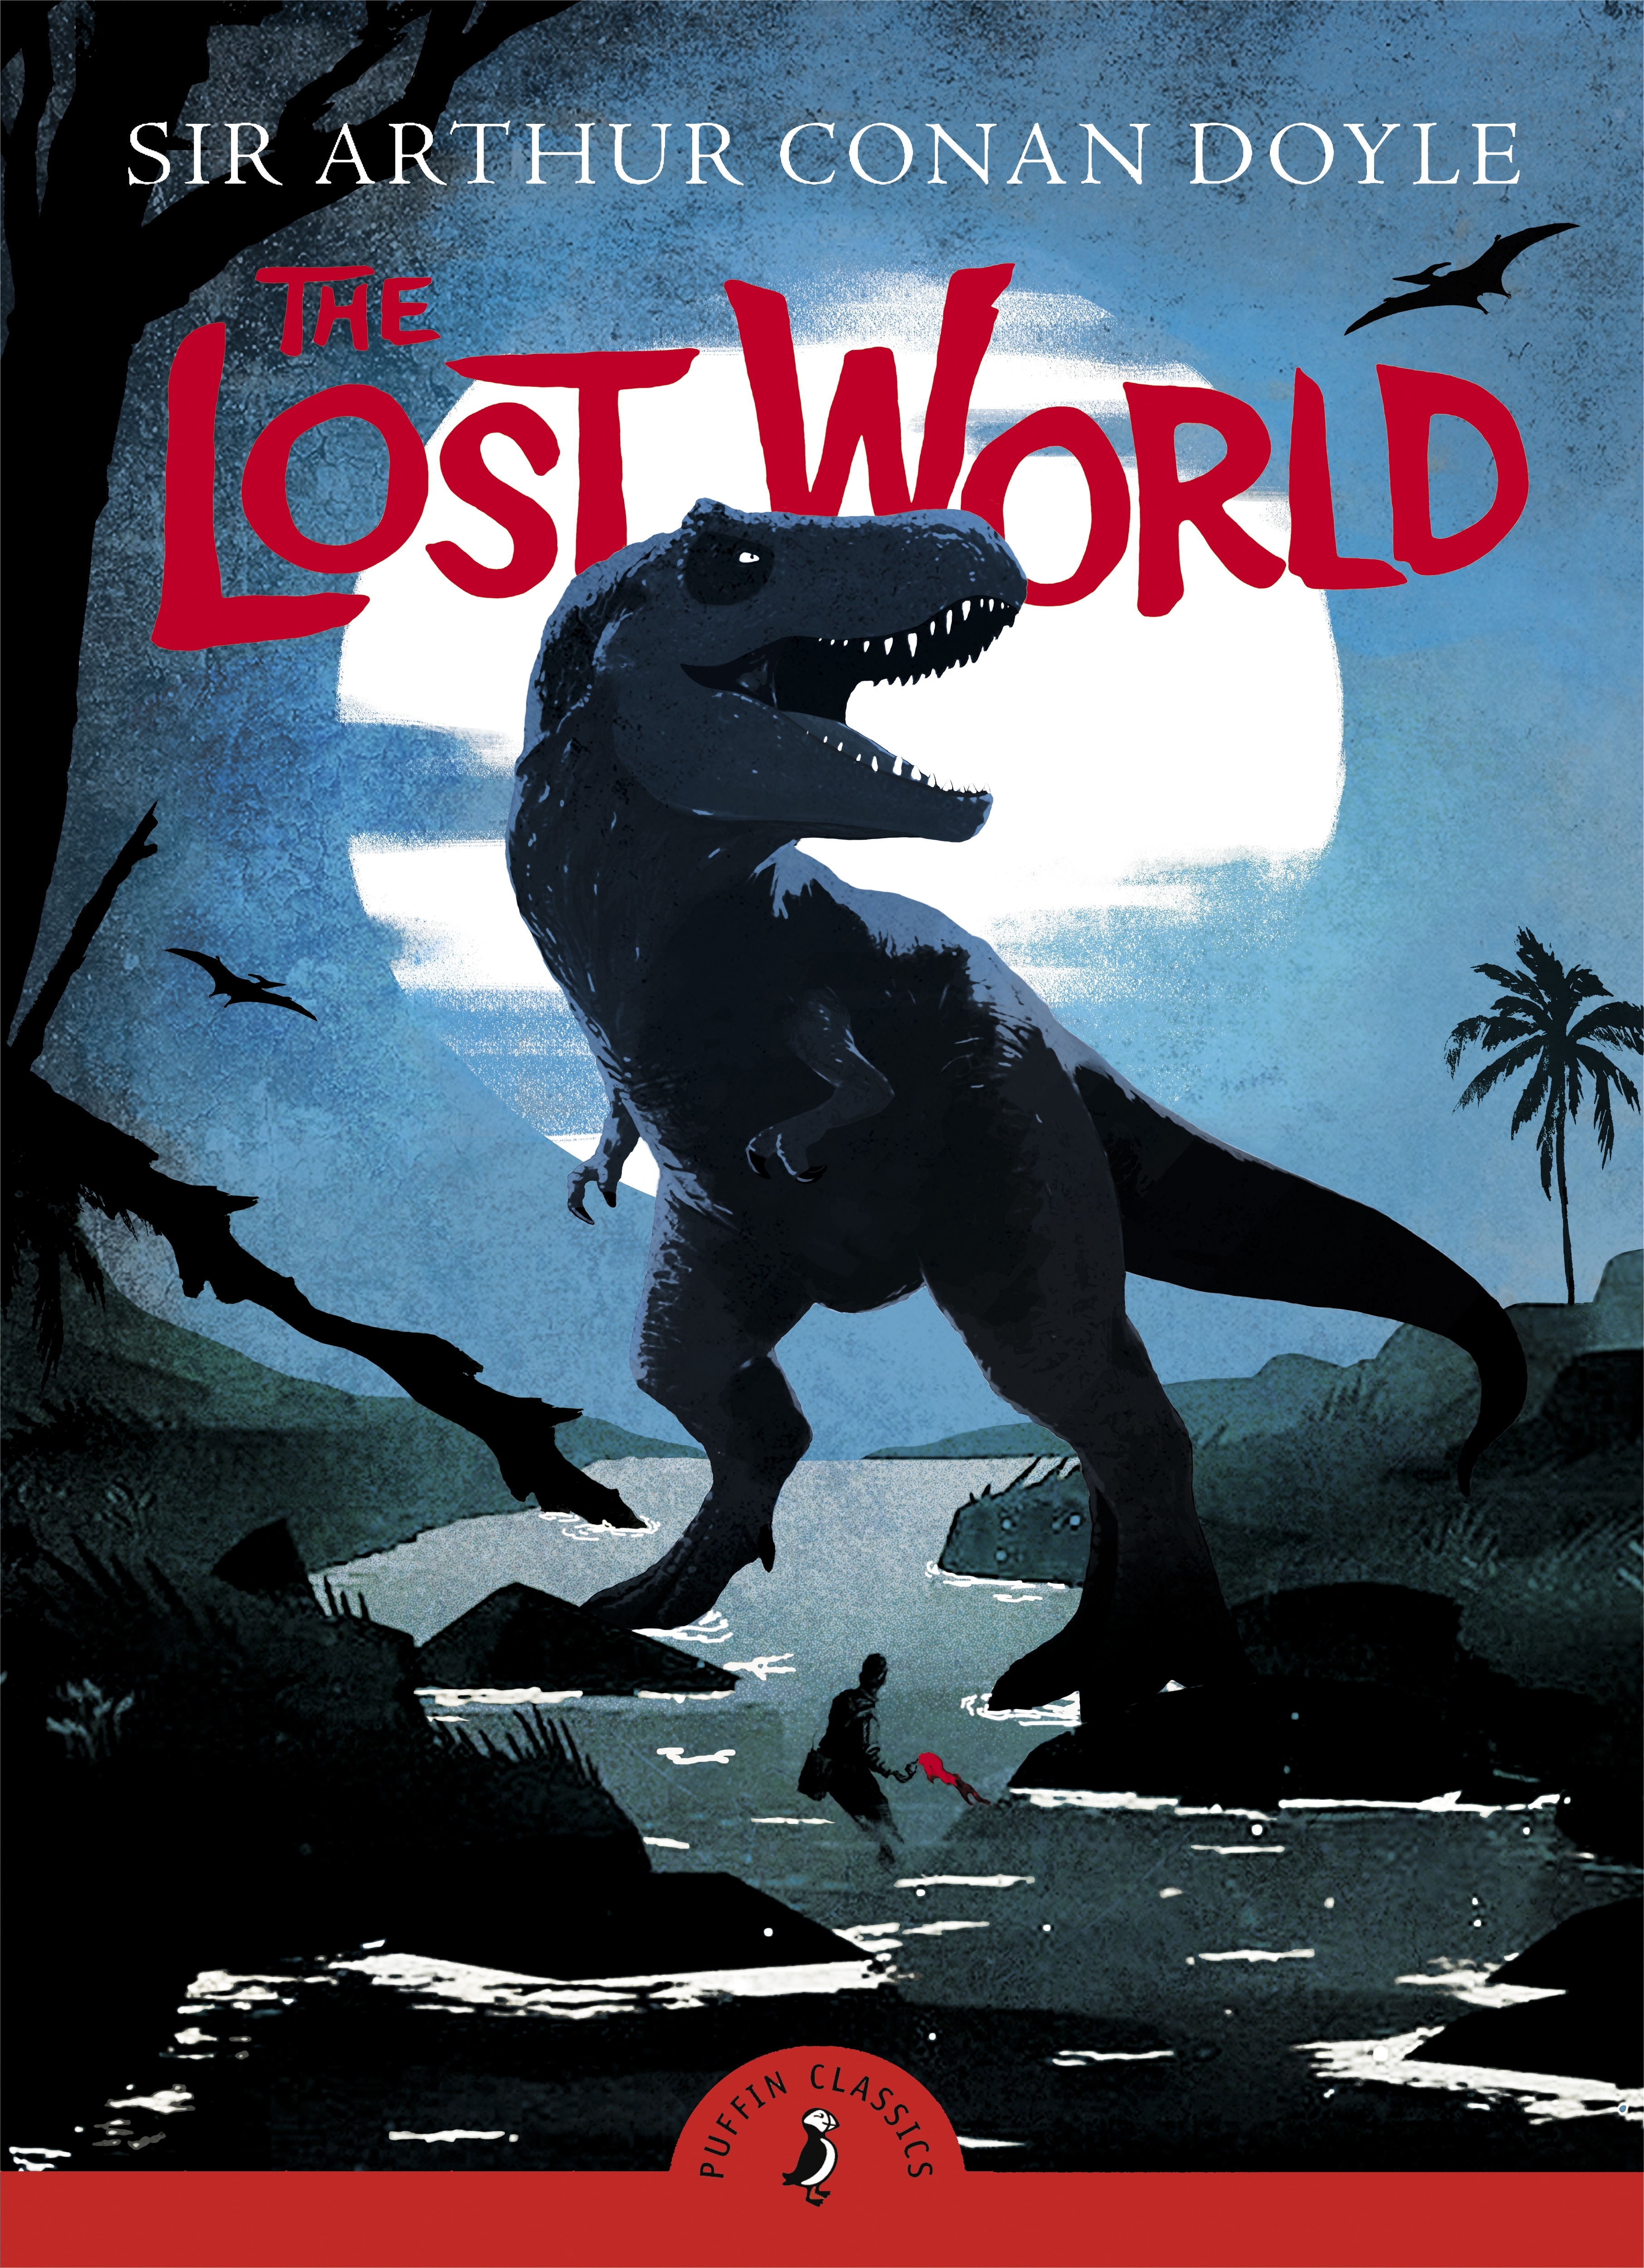 Book “The Lost World” by Arthur Conan Doyle — September 19, 2019